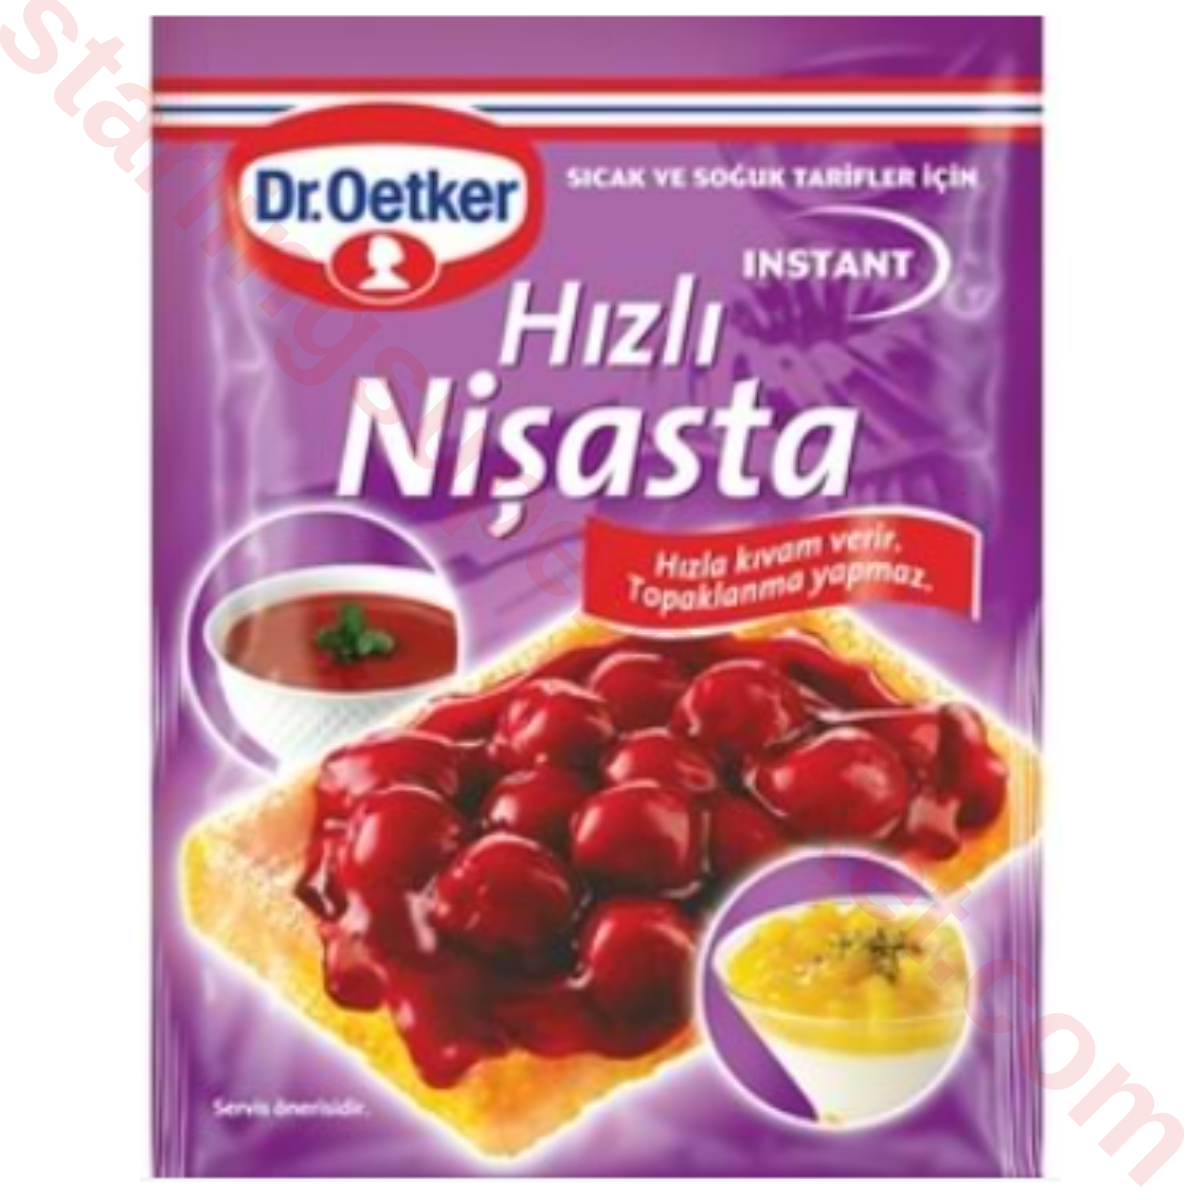 DR OETKER HIZLI NISASTA 10 G